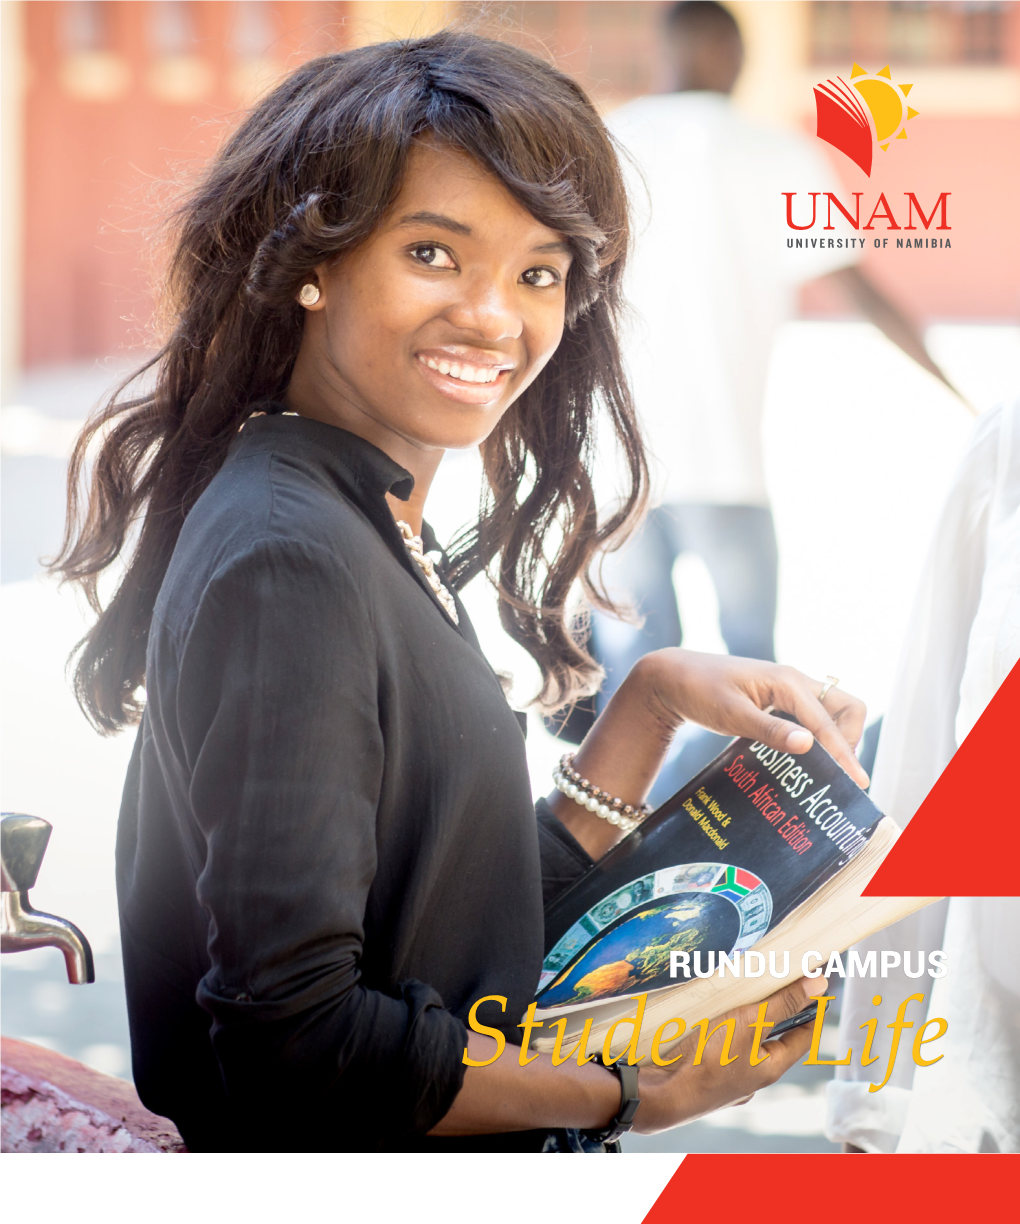 Rundu Campus Student Life Academic Programmes on Offer